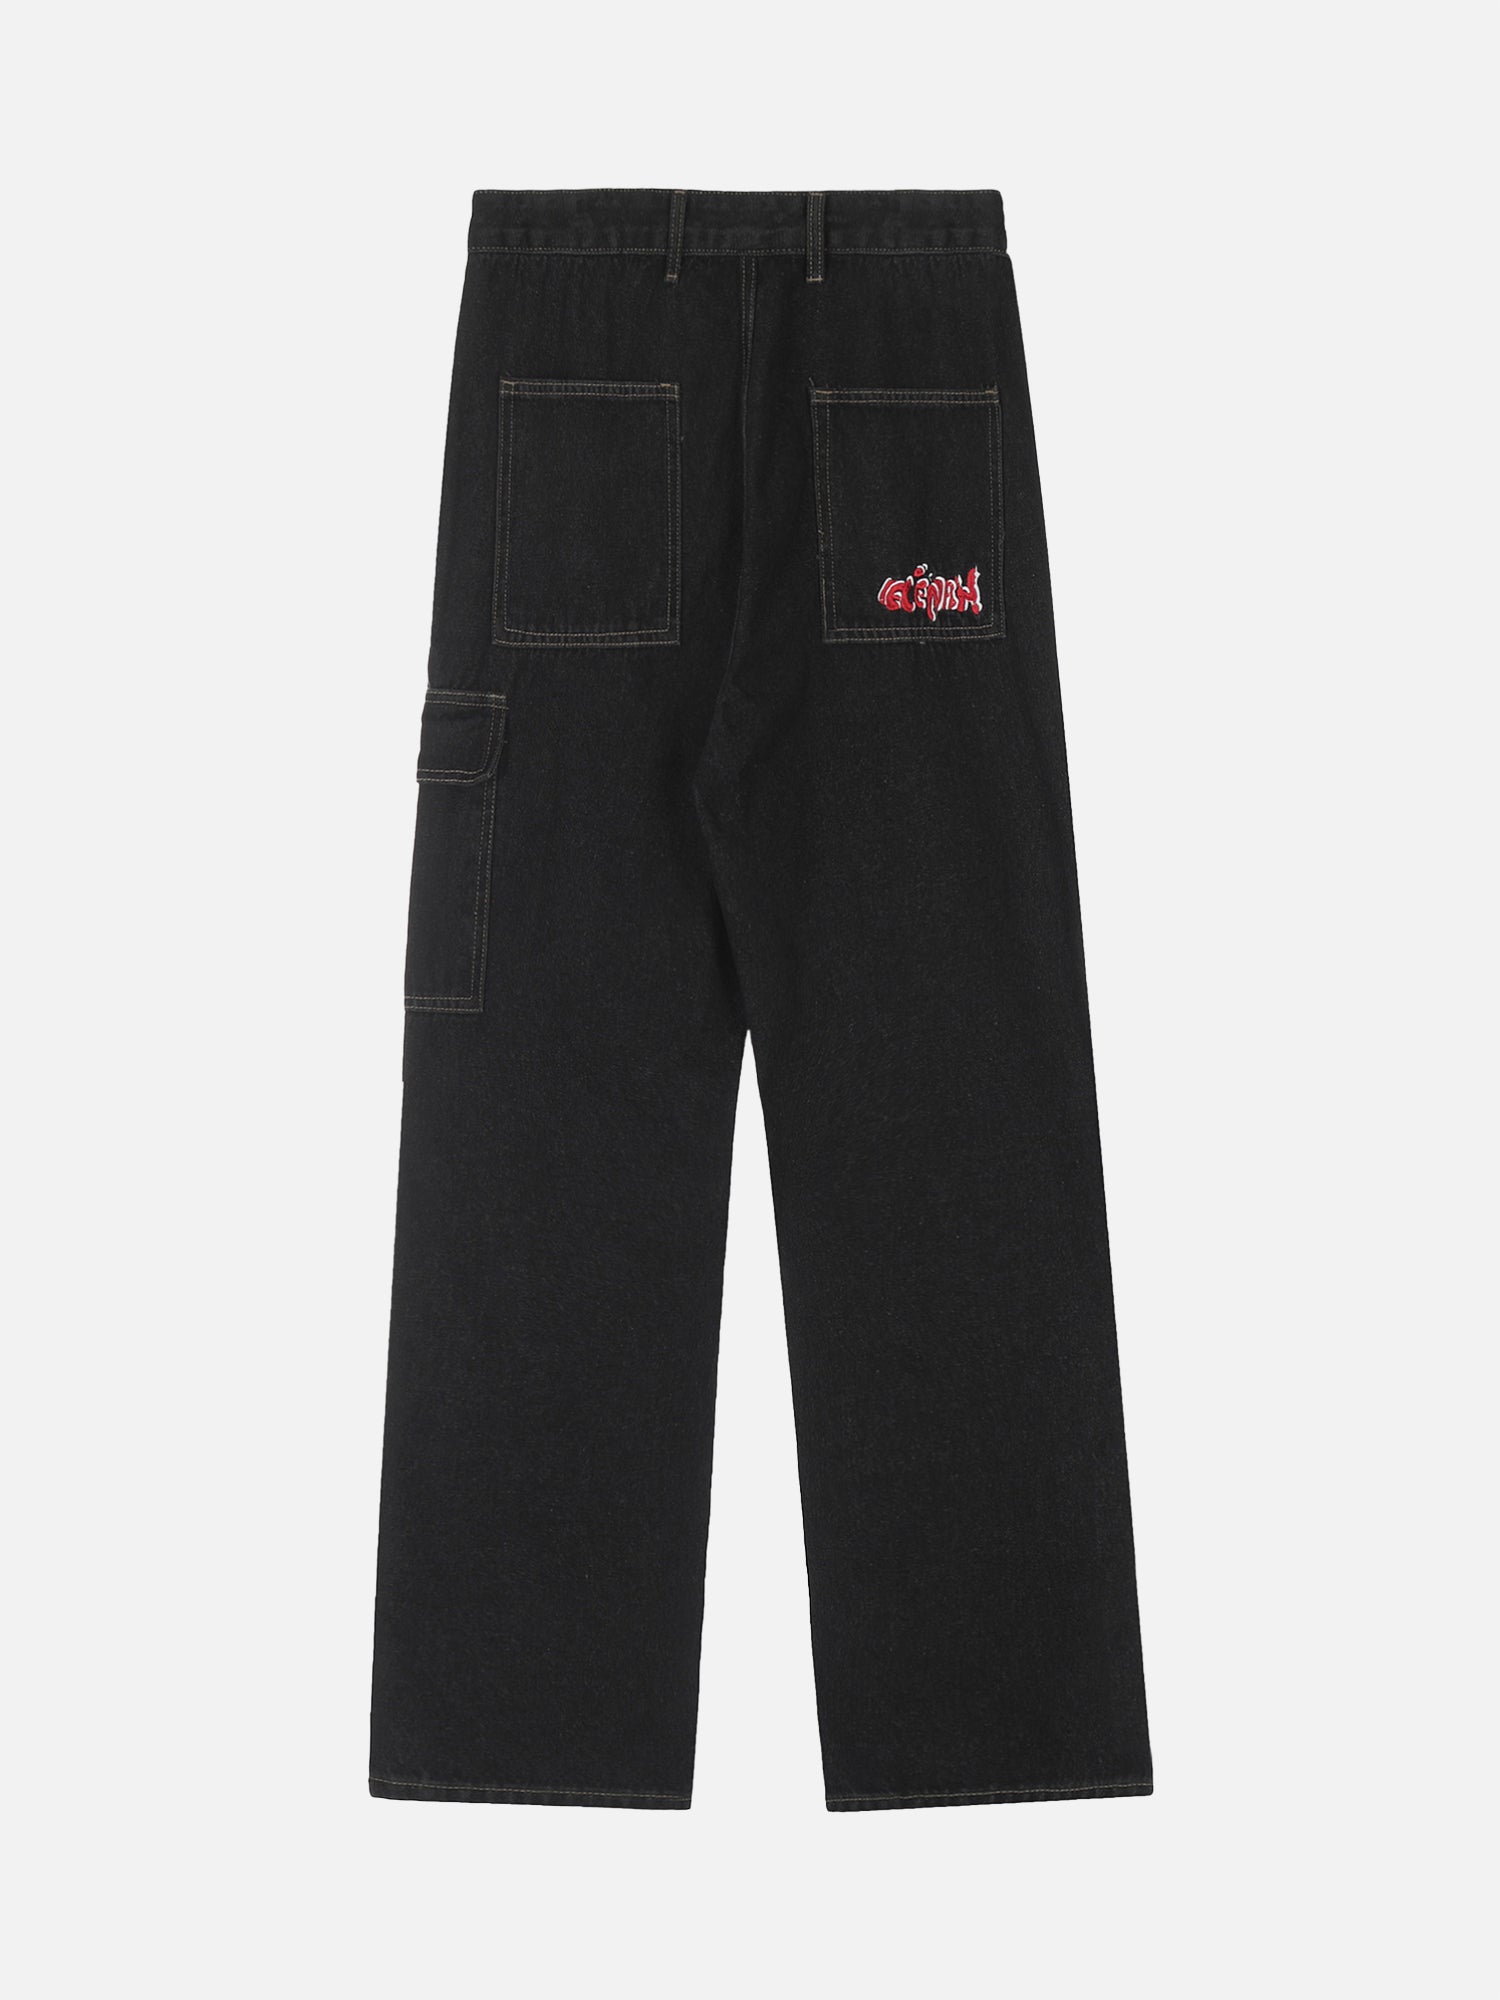 Thesupermade Fashionable Niche Design Pocket Wwork Jeans